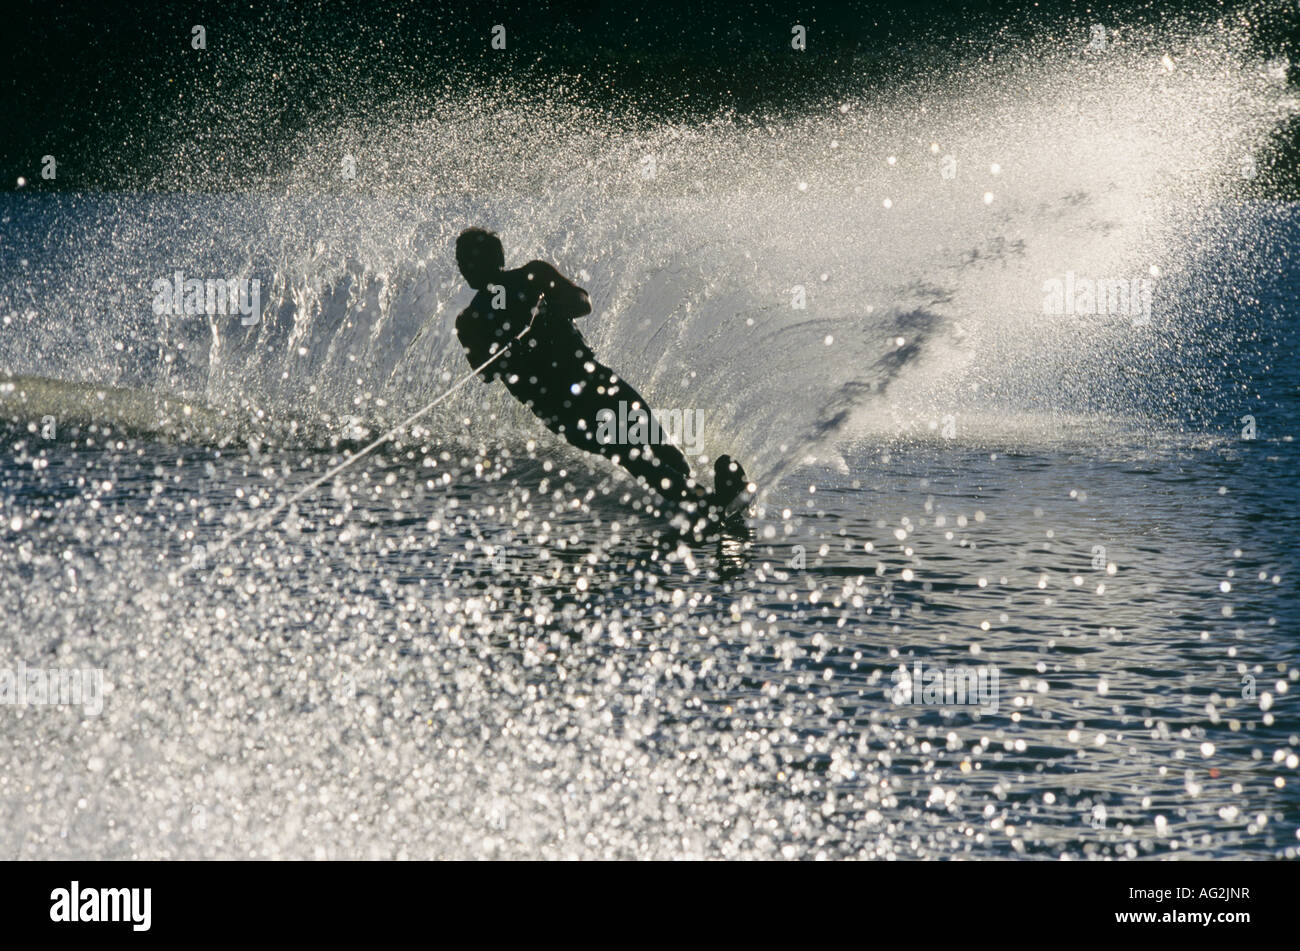 Wasser-Skifahrer in Aktion, silhouette Stockfoto